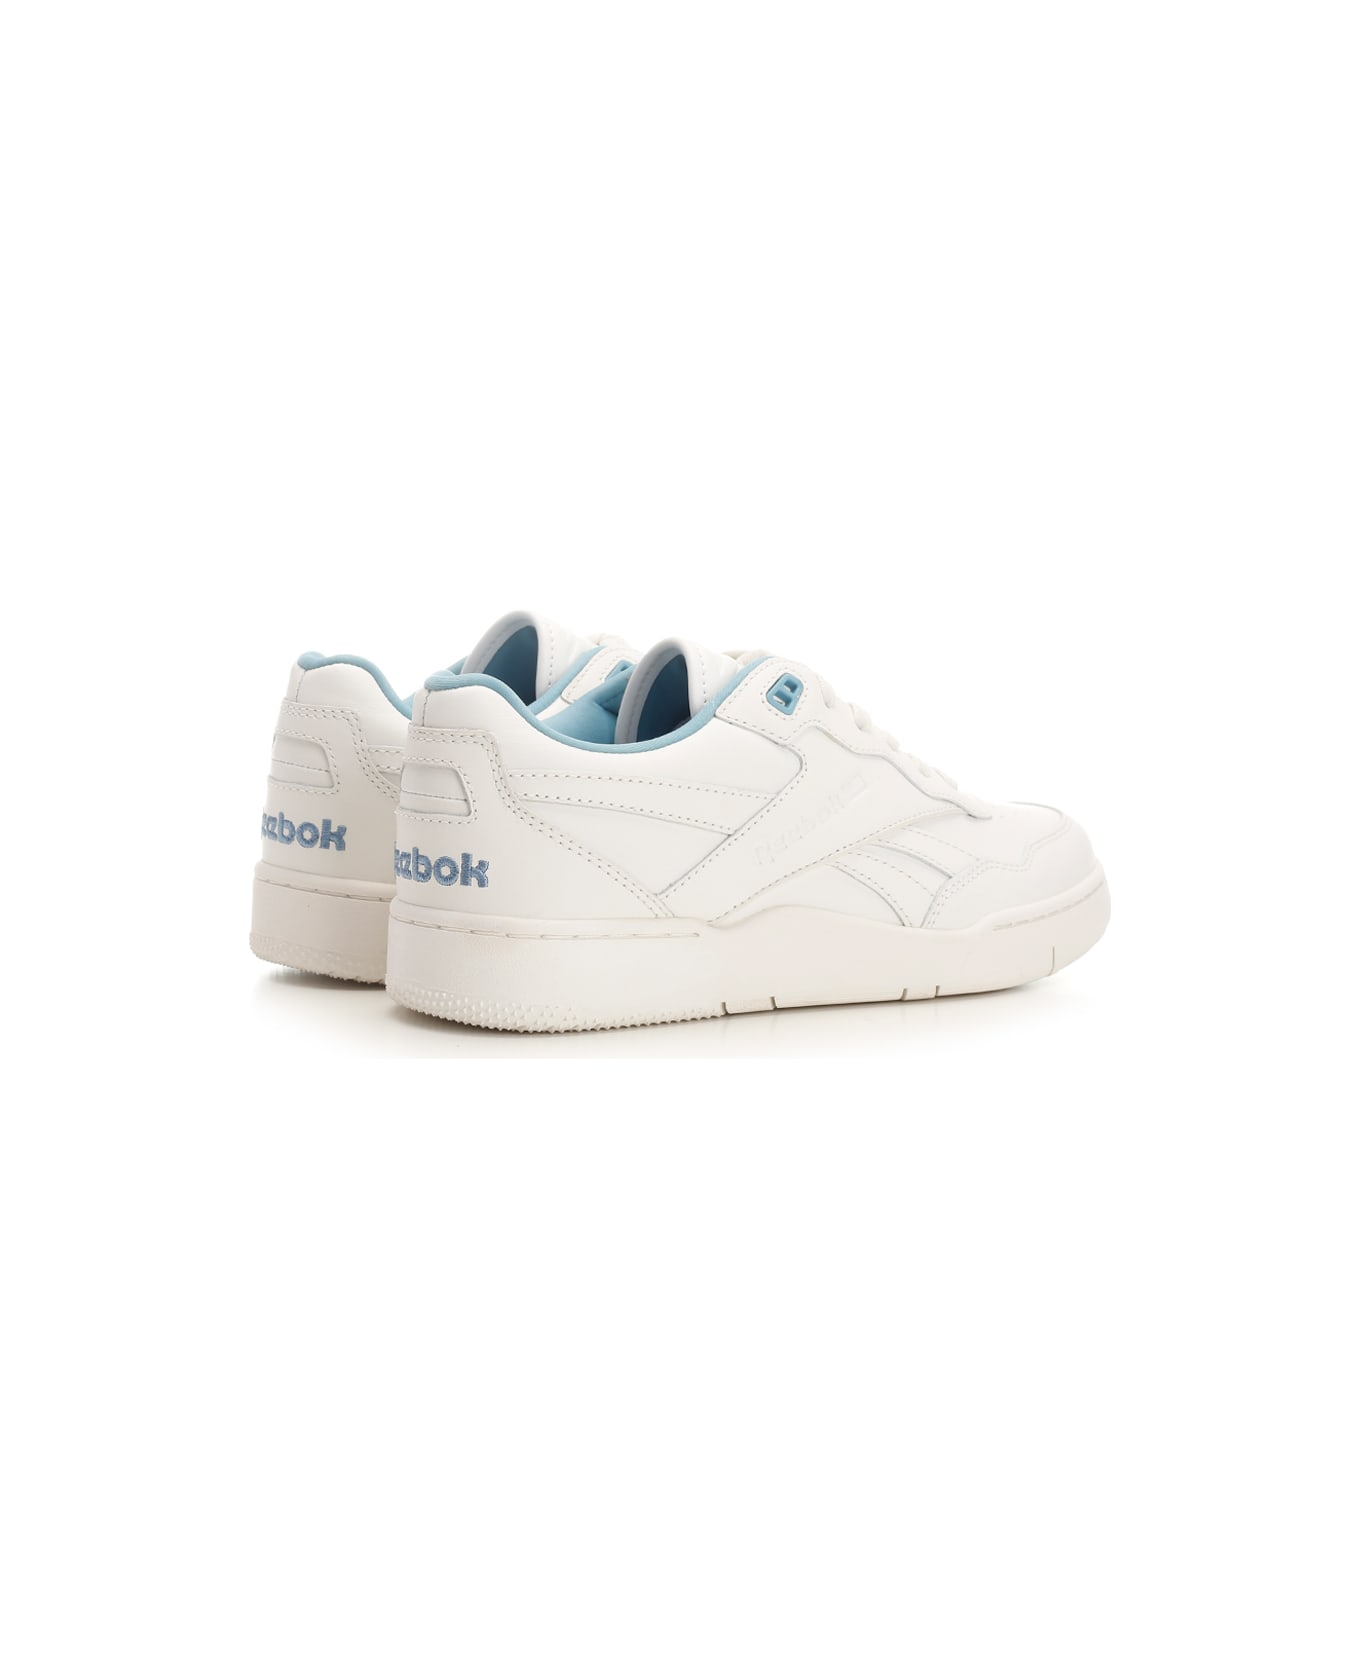 Reebok 'bb4000' Sneakers - Blue